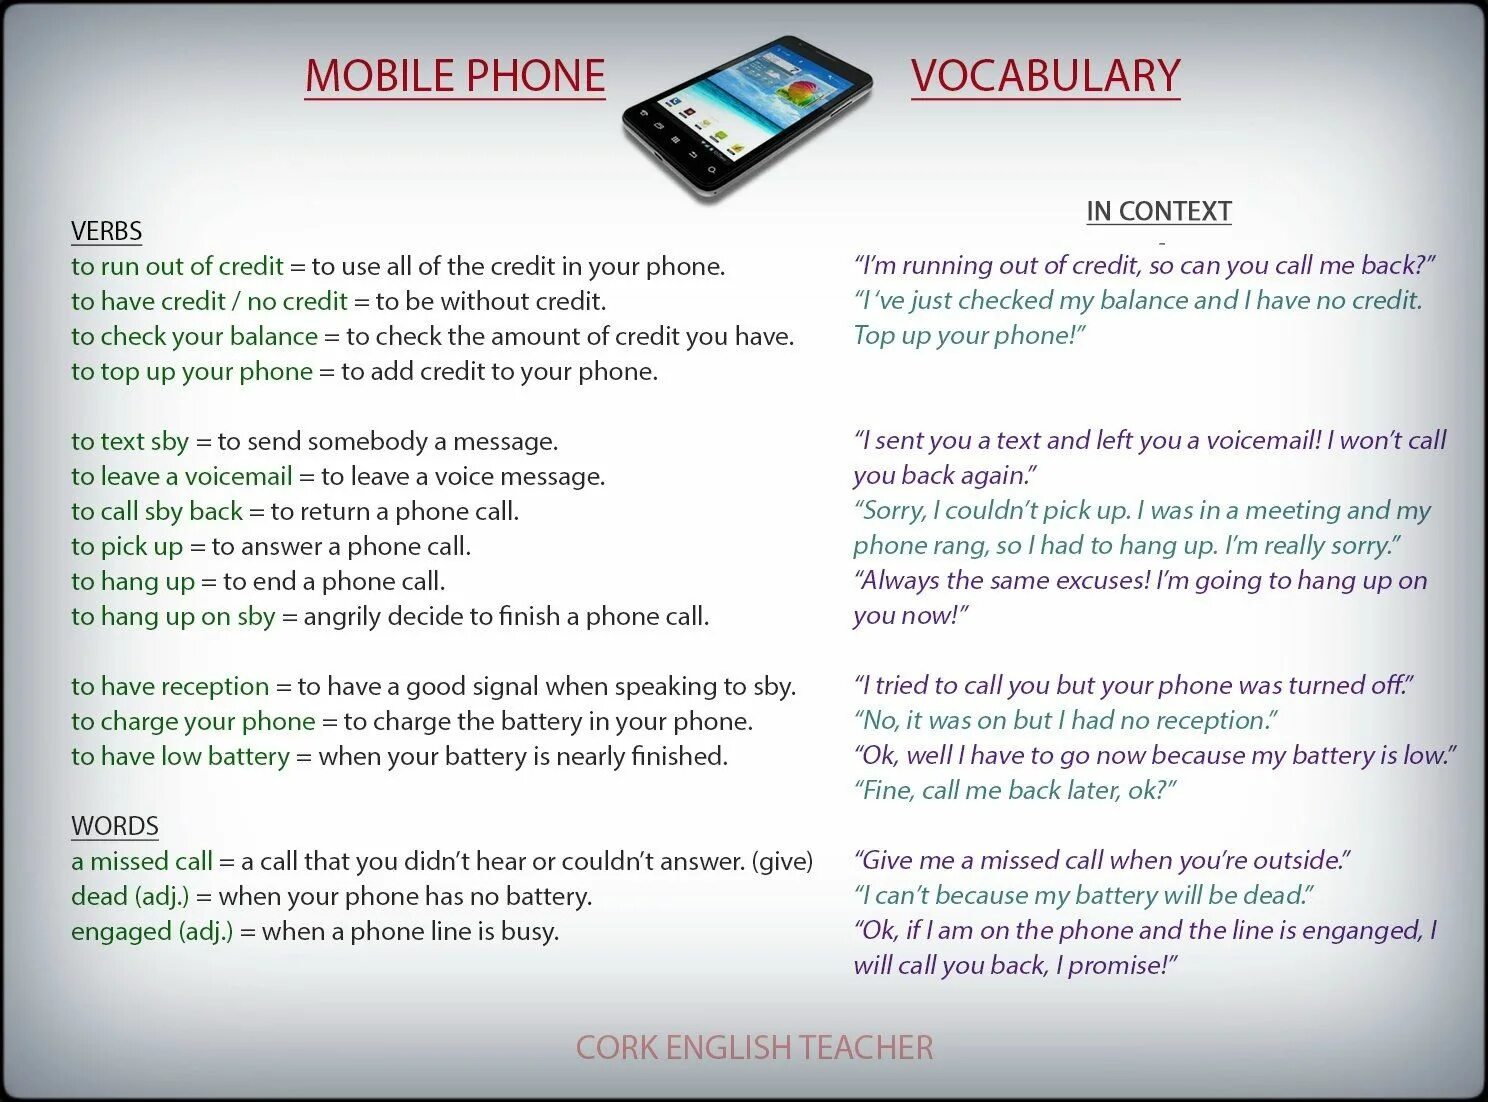 Mobile Phone Vocabulary. Вокабуляр mobile Phone. Phone Calls Vocabulary. Мобильный телефон по английскому.